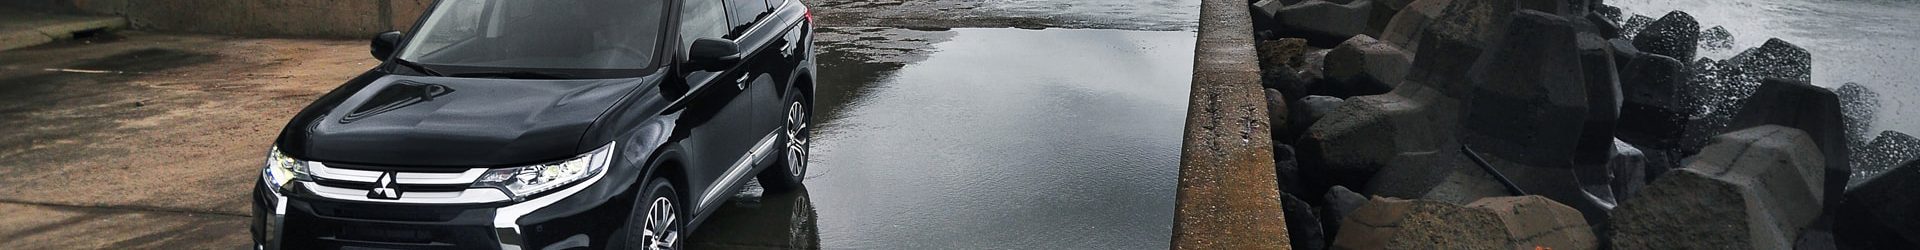 –高美濕地– BMW F01 740i 開箱拍攝